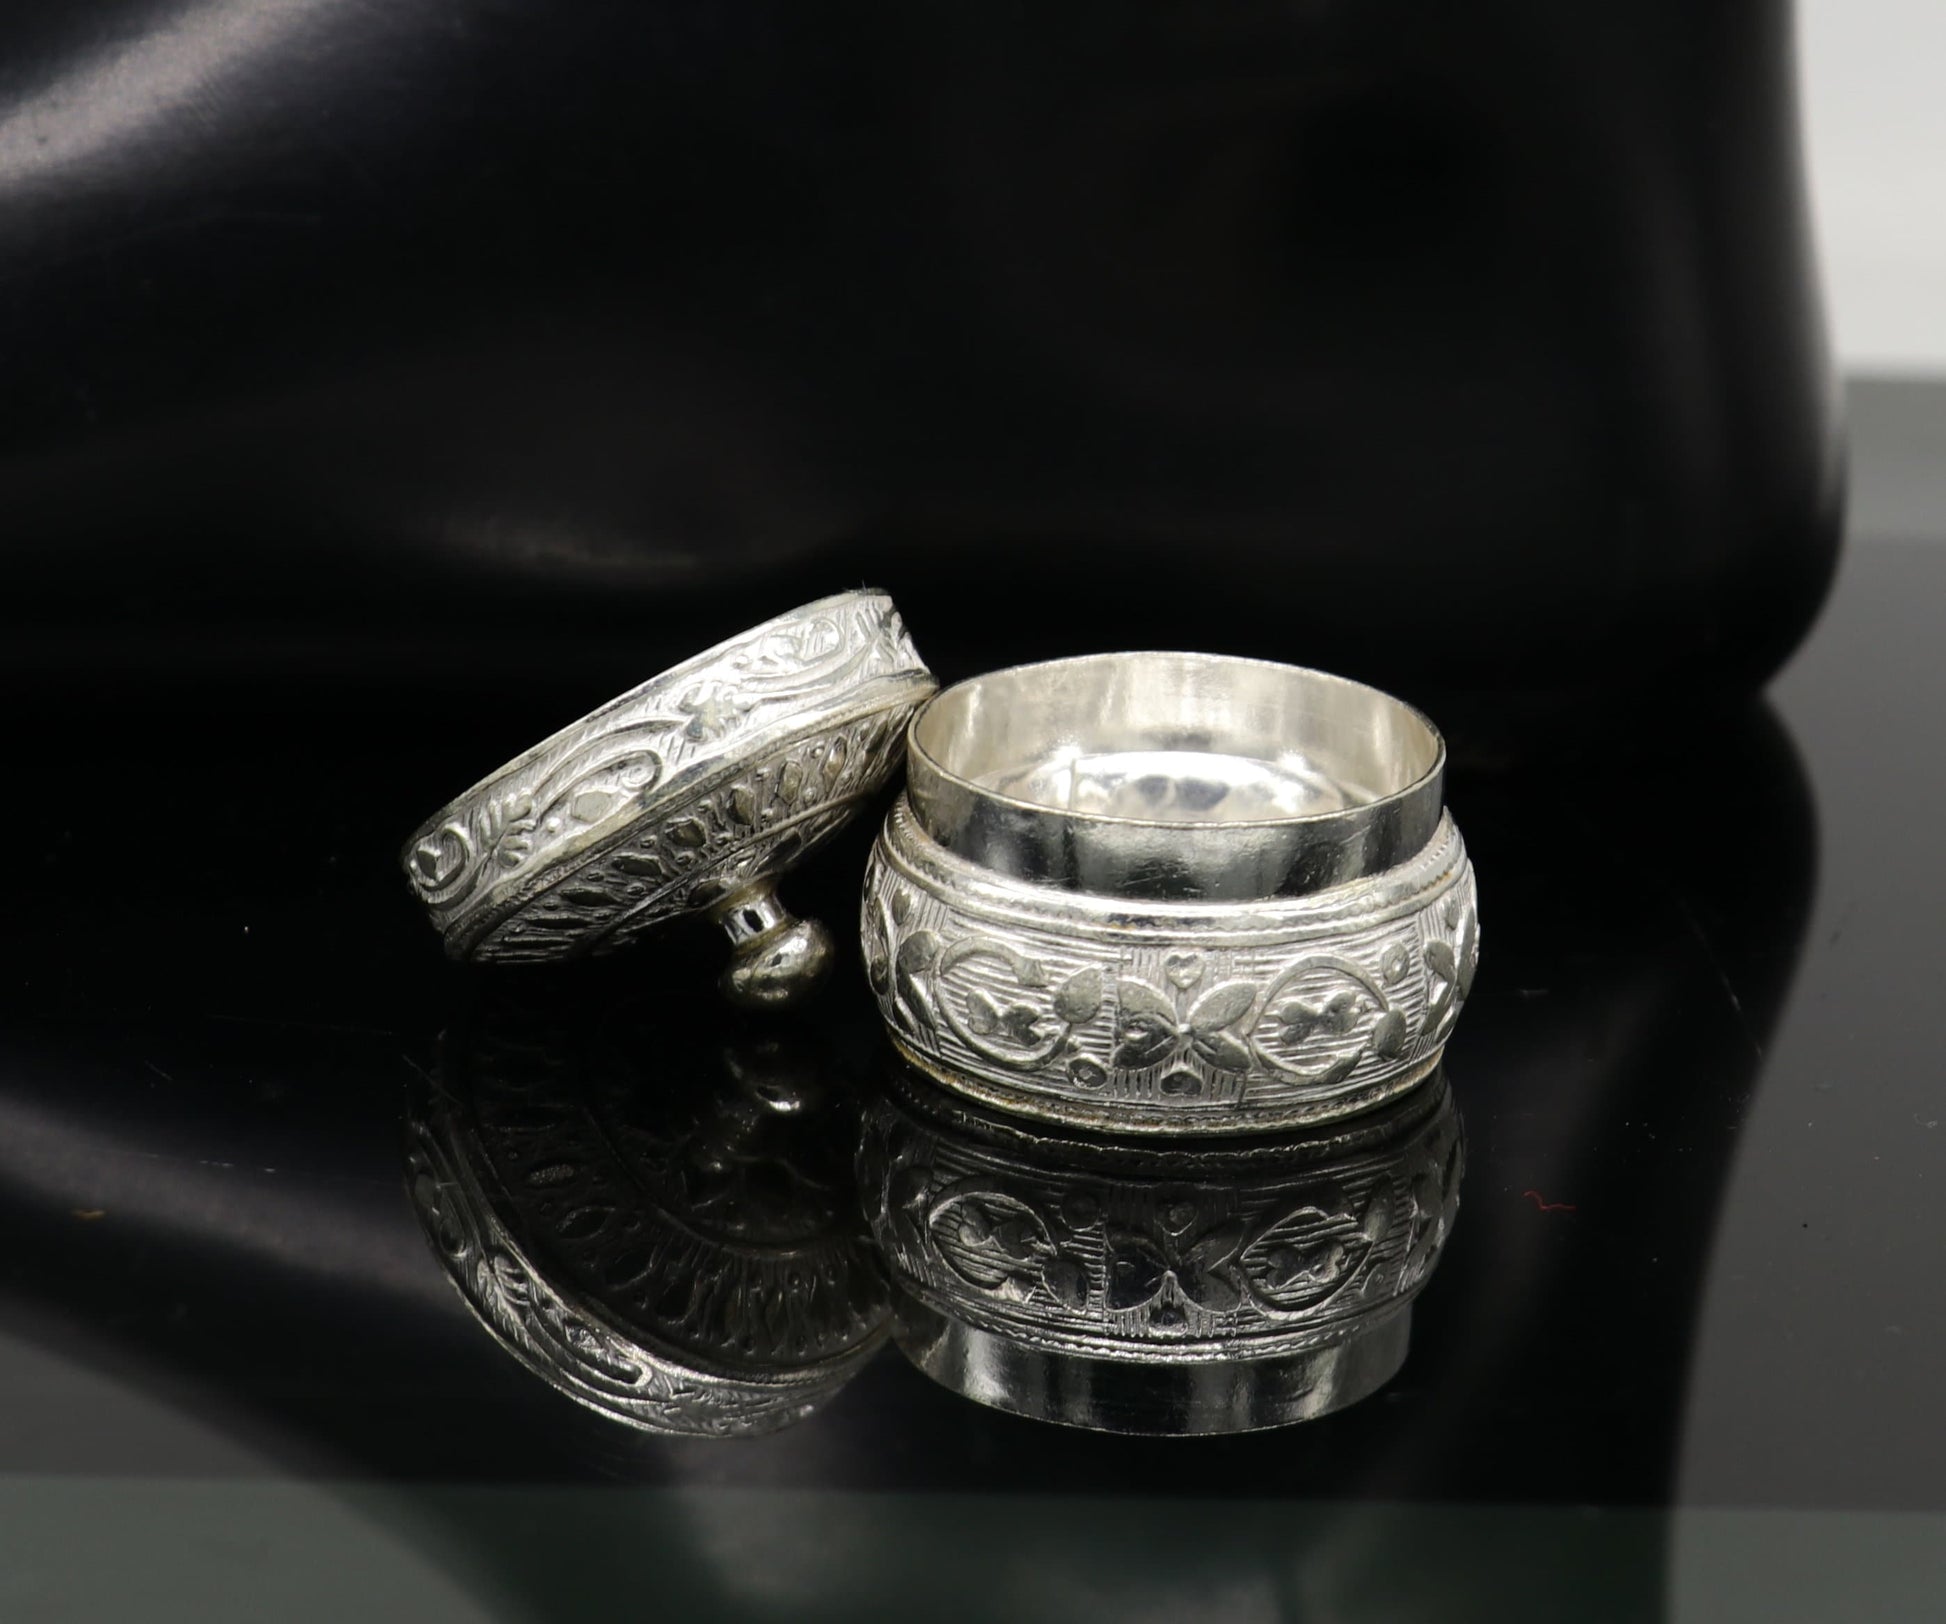 925 sterling silver unique antique design handmade brides eyes kajal box, surma box, kumkum sindur box, small trinket box article stb111 - TRIBAL ORNAMENTS